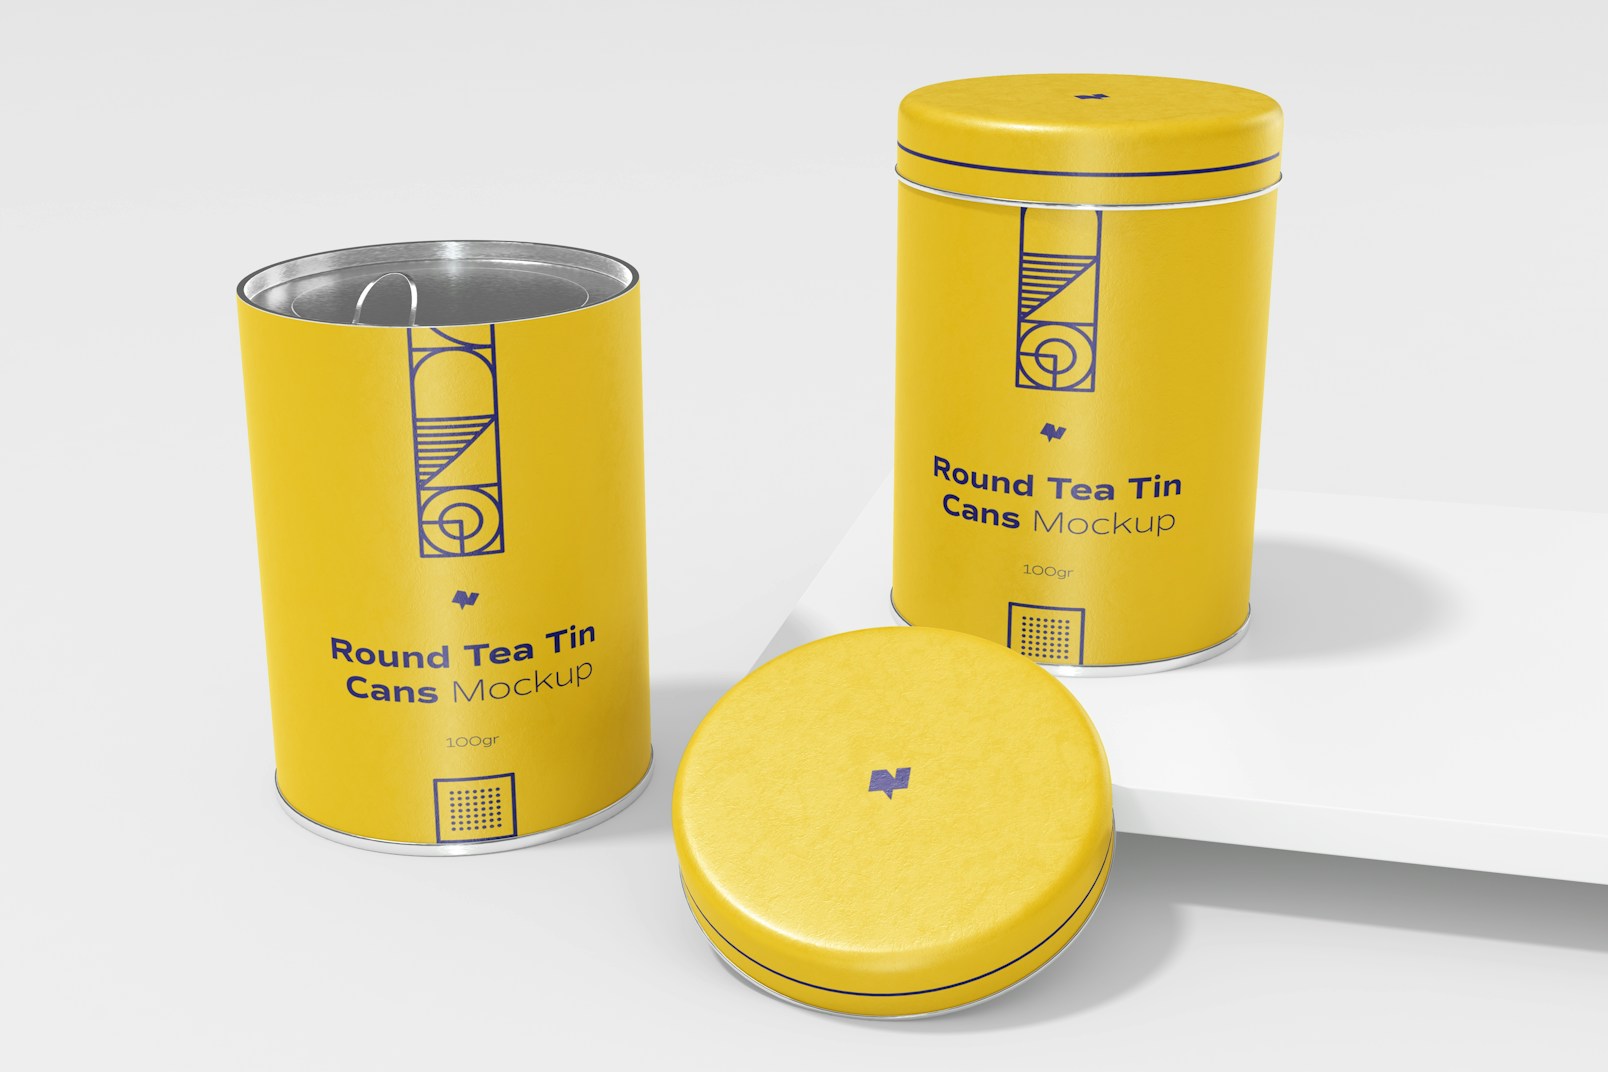 Round Tea Tin Cans Mockup with Rectangular Stone